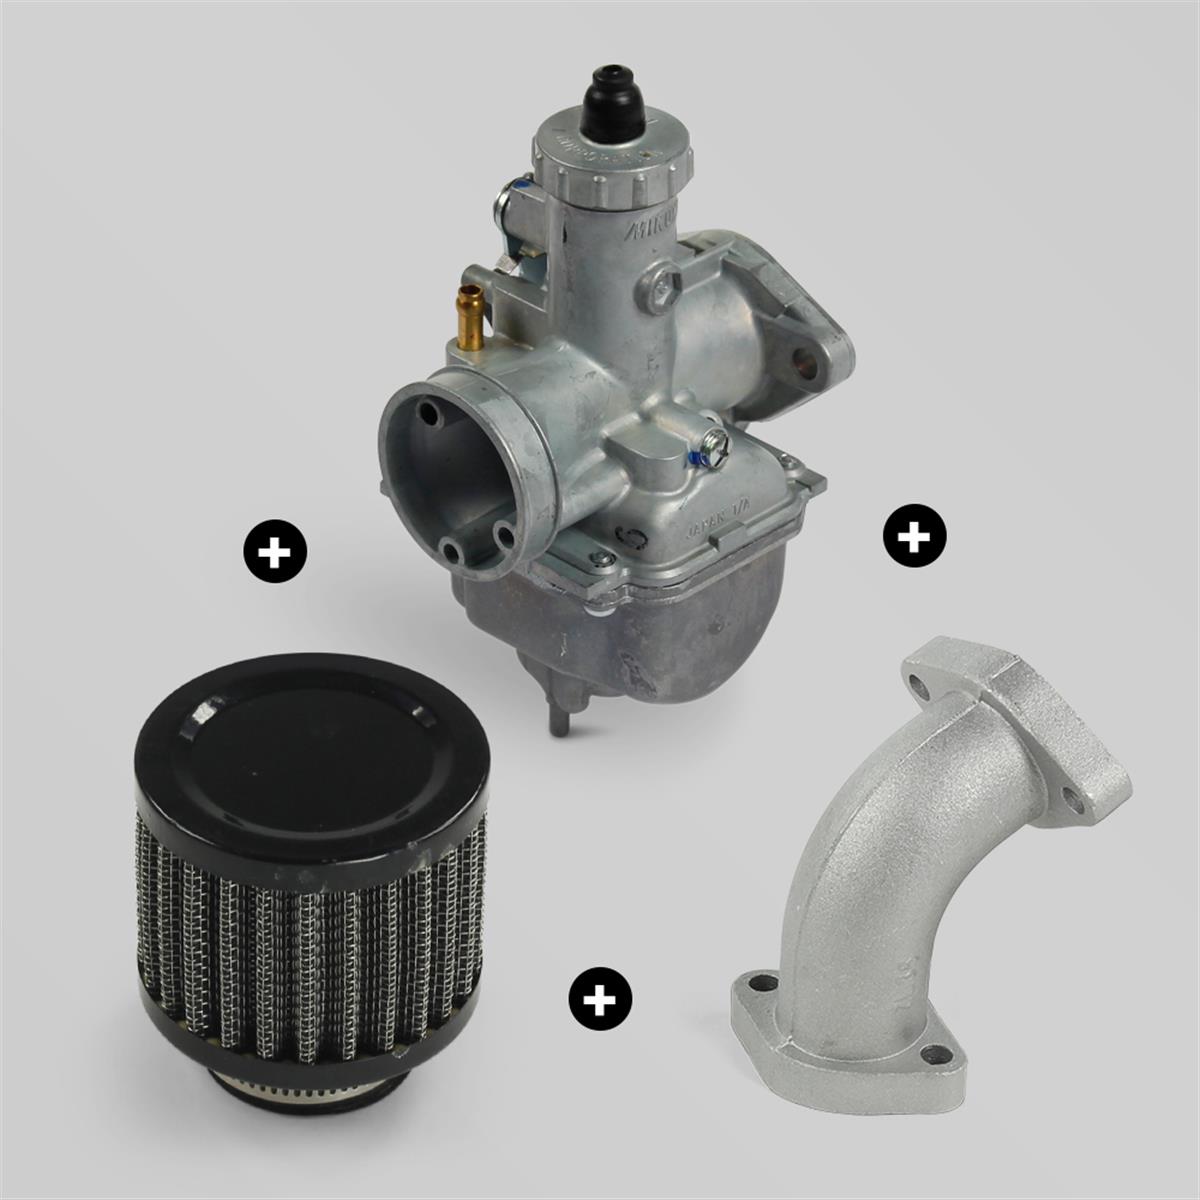 Pack complet carburateur Mikuni 26mm + filtre à air Cornet racing 38mm |  Smallmx - Dirt bike, Pit bike, Quads, Minimoto